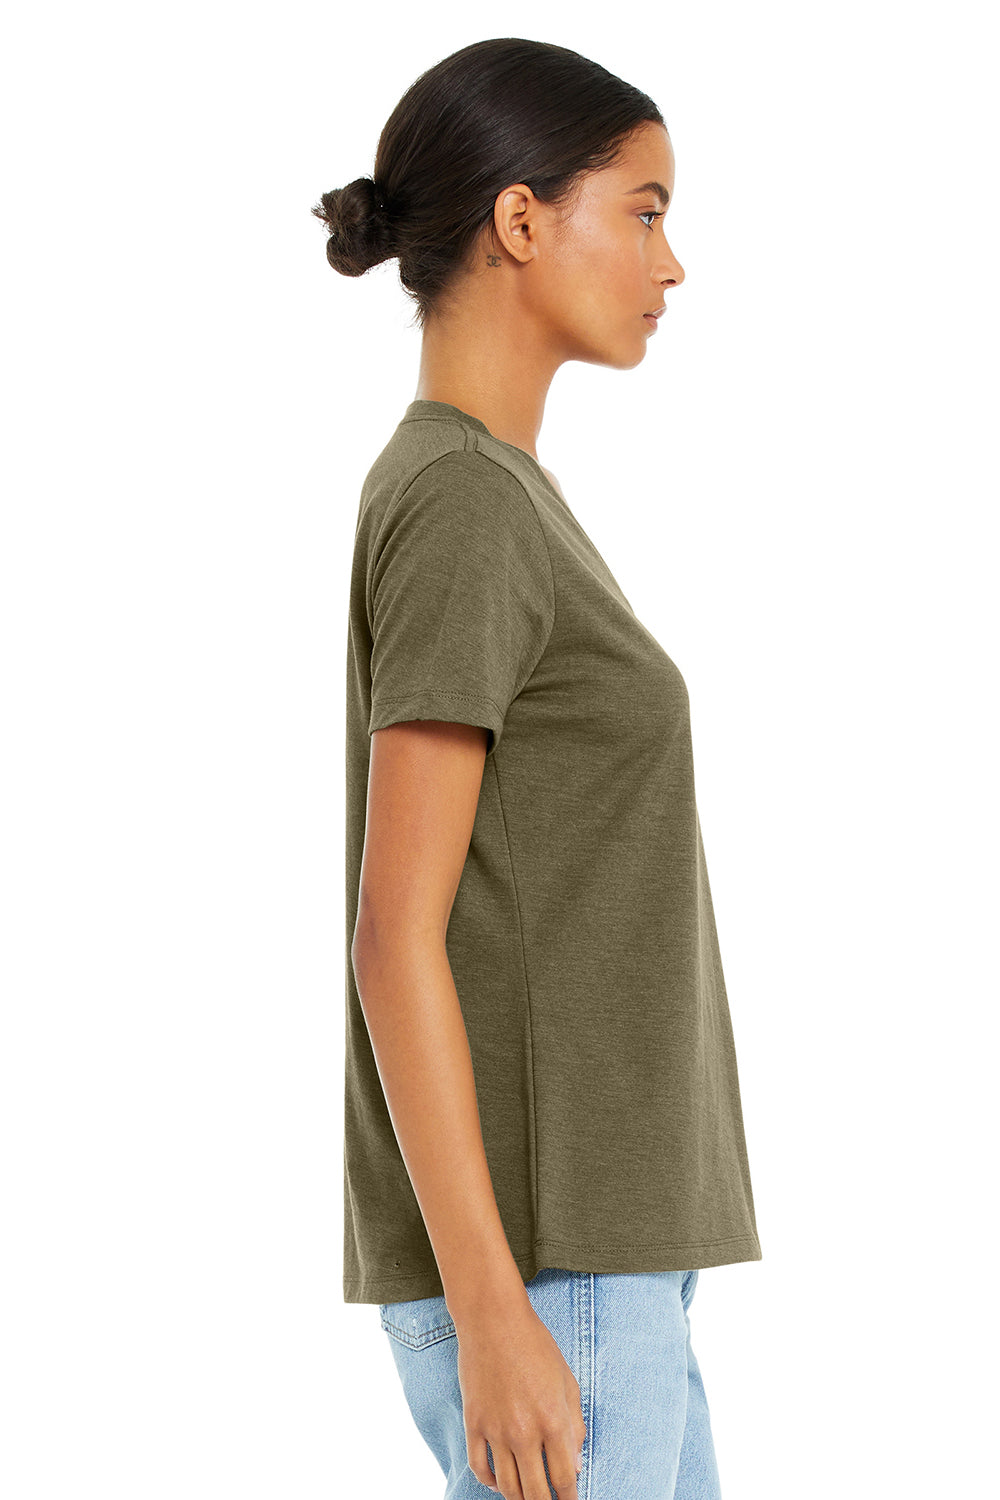 Bella + Canvas BC6405CVC Womens CVC Short Sleeve V-Neck T-Shirt Heather Olive Green Model Side